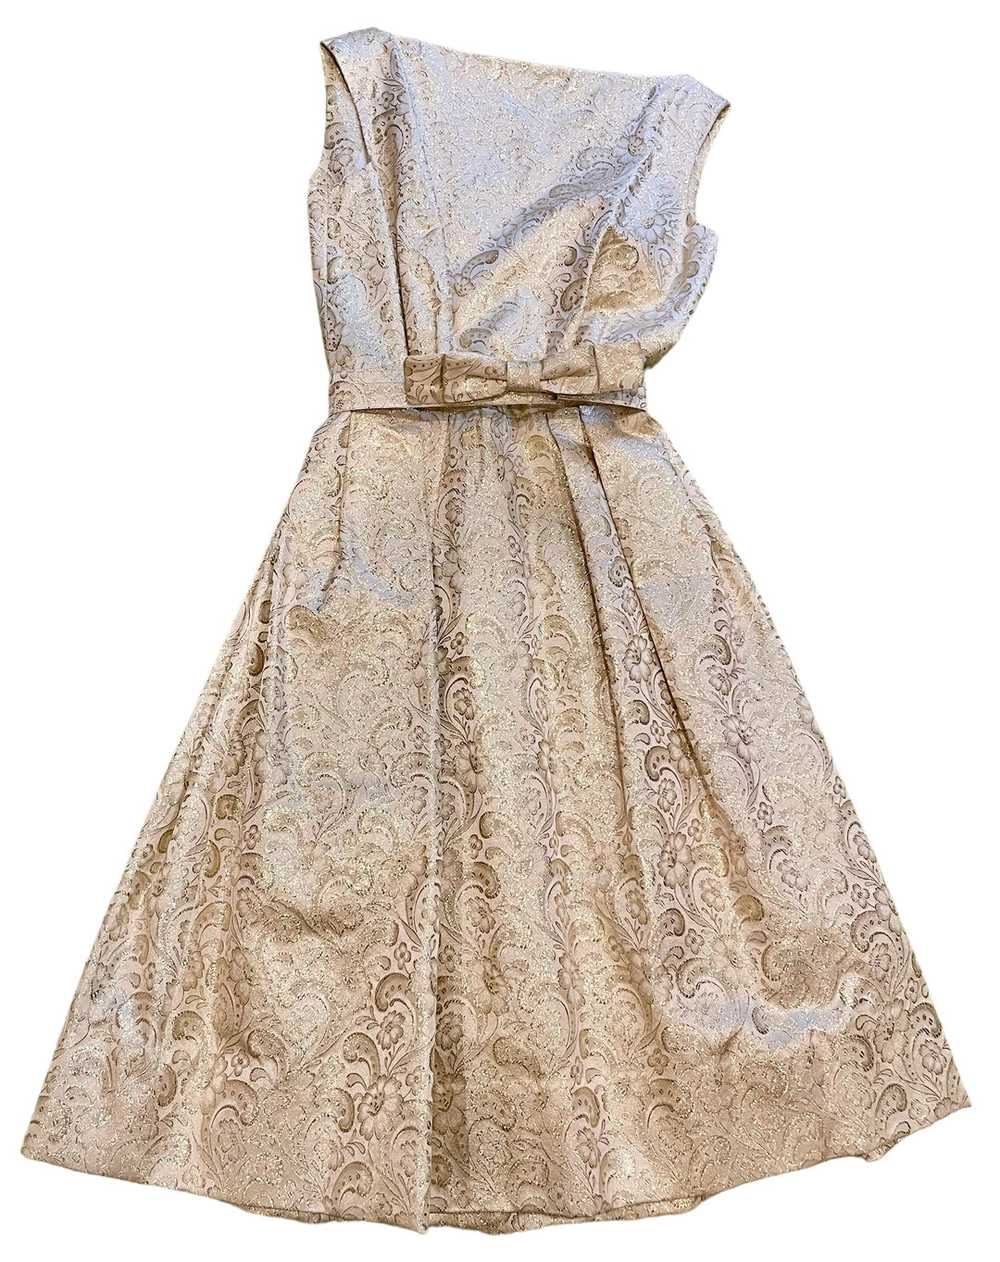 1950's Gold Dress - image 1